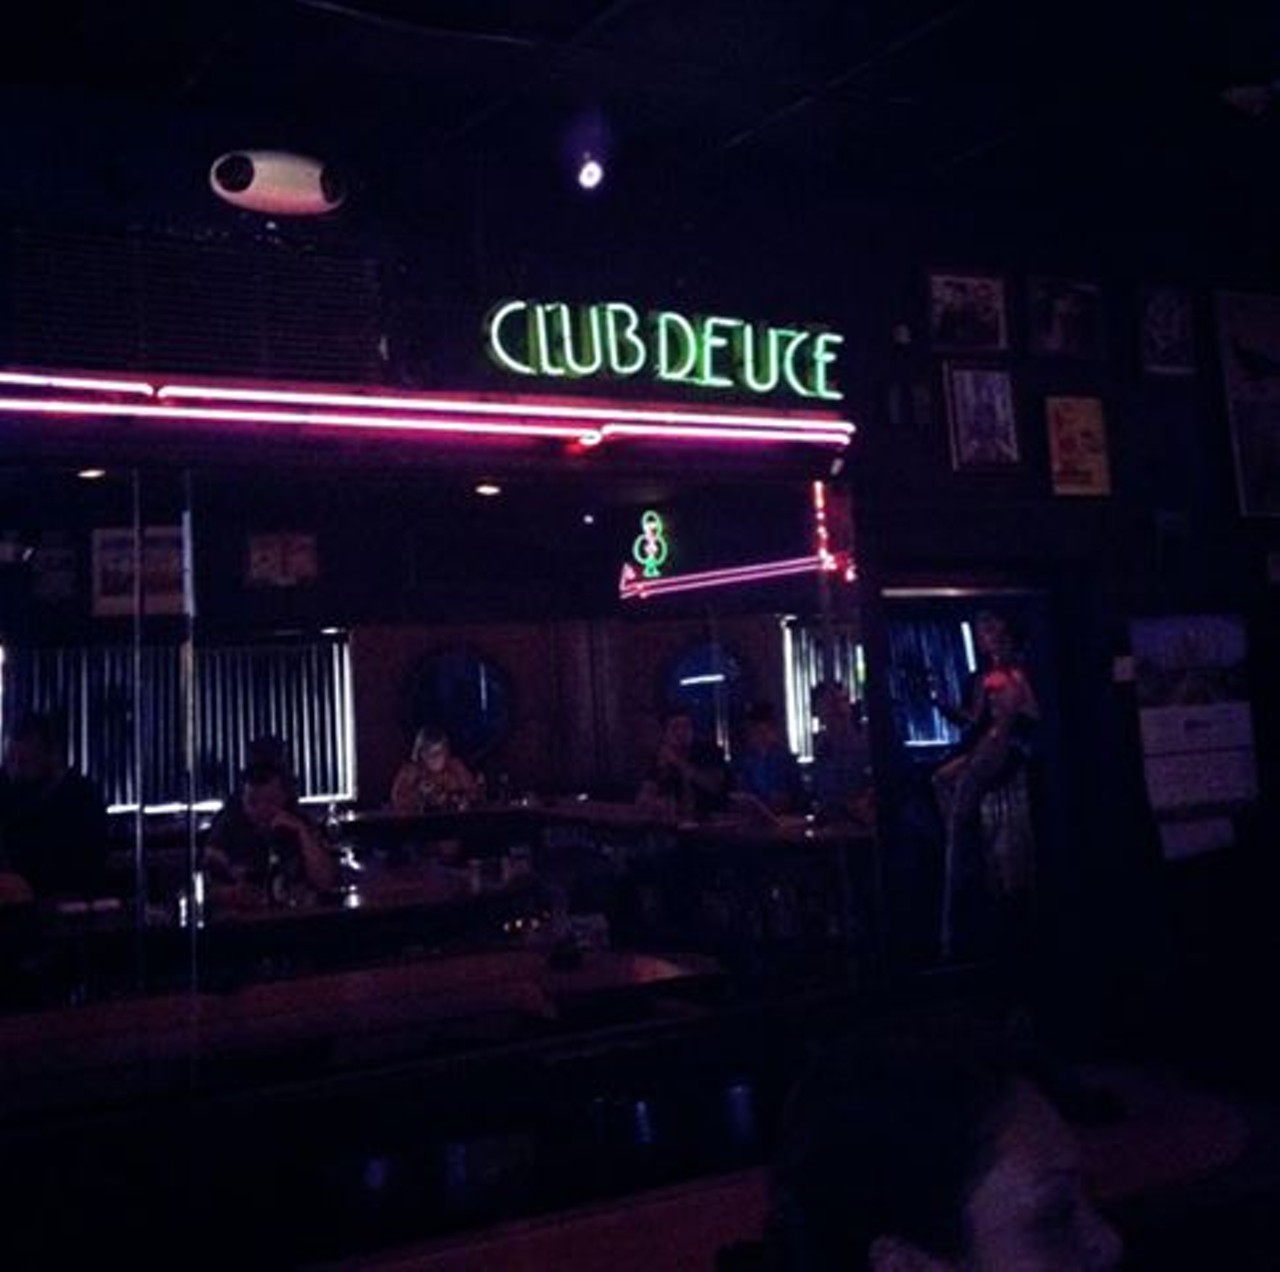 We hit the best bar on South Beach, Mac's Club Deuce.